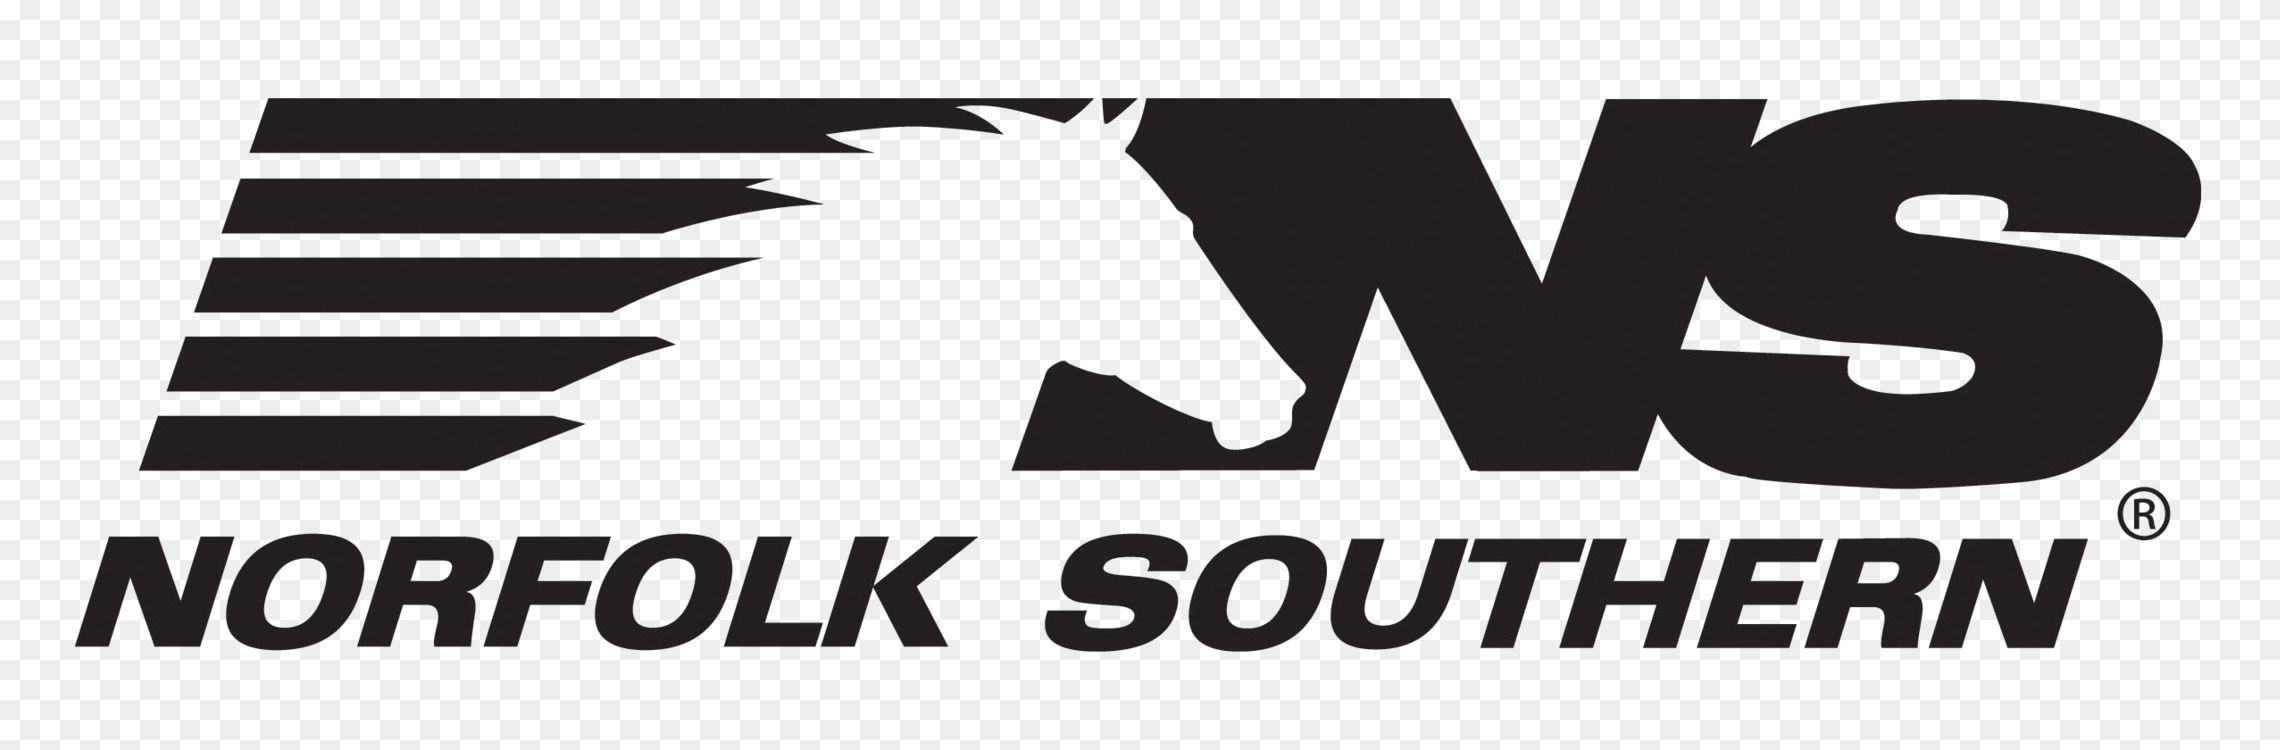 Southern Railway Logo - Logo Norfolk Southern Railway Brand Emblem Free PNG Image - Logo ...